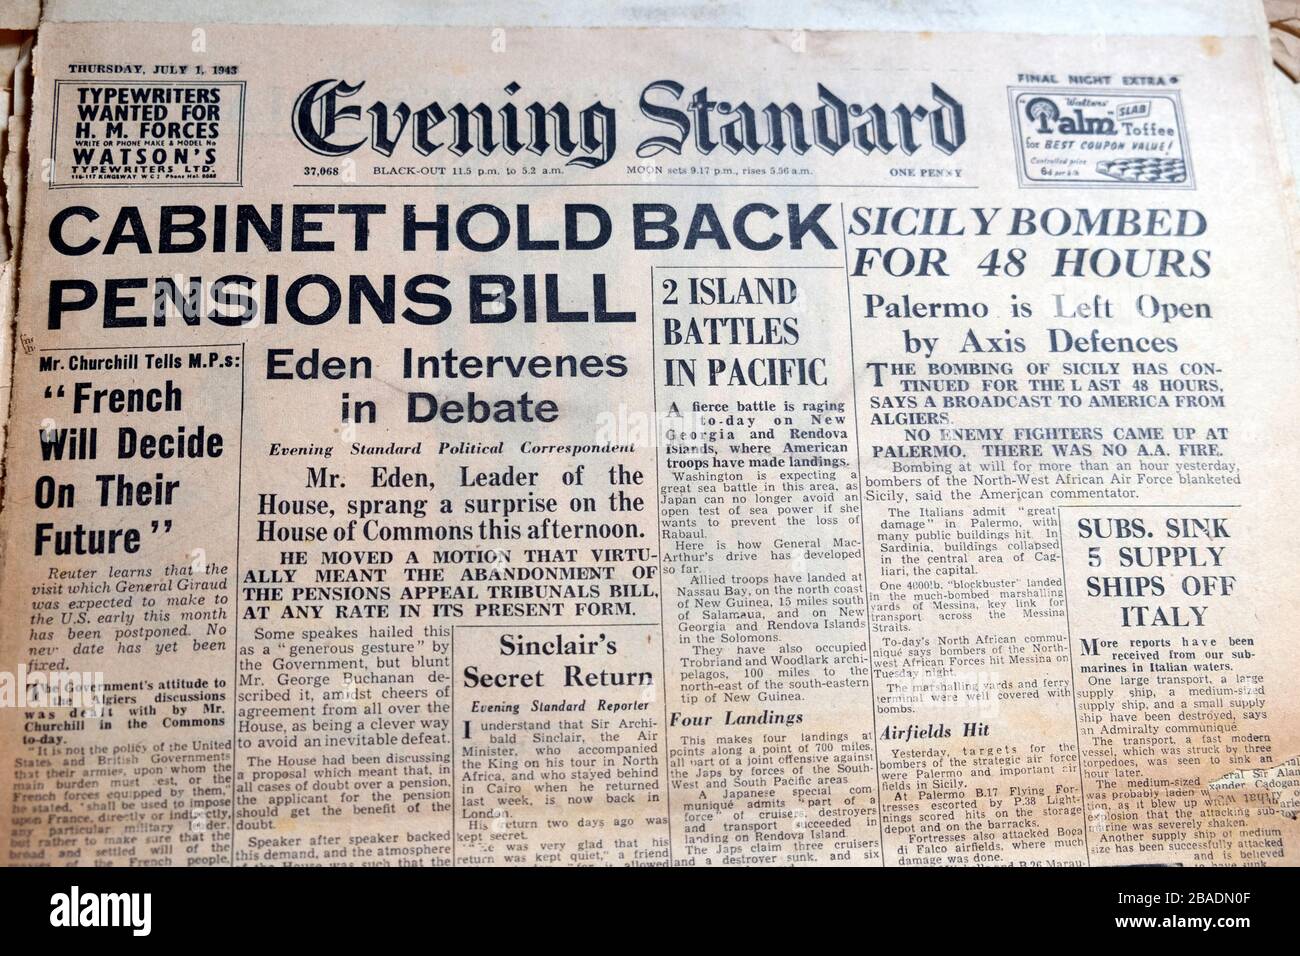 'Cabinet Hold Back Pensions Bill' 1 luglio 1943 pagina anteriore British Evening Standard Newspaper in London England UK Foto Stock